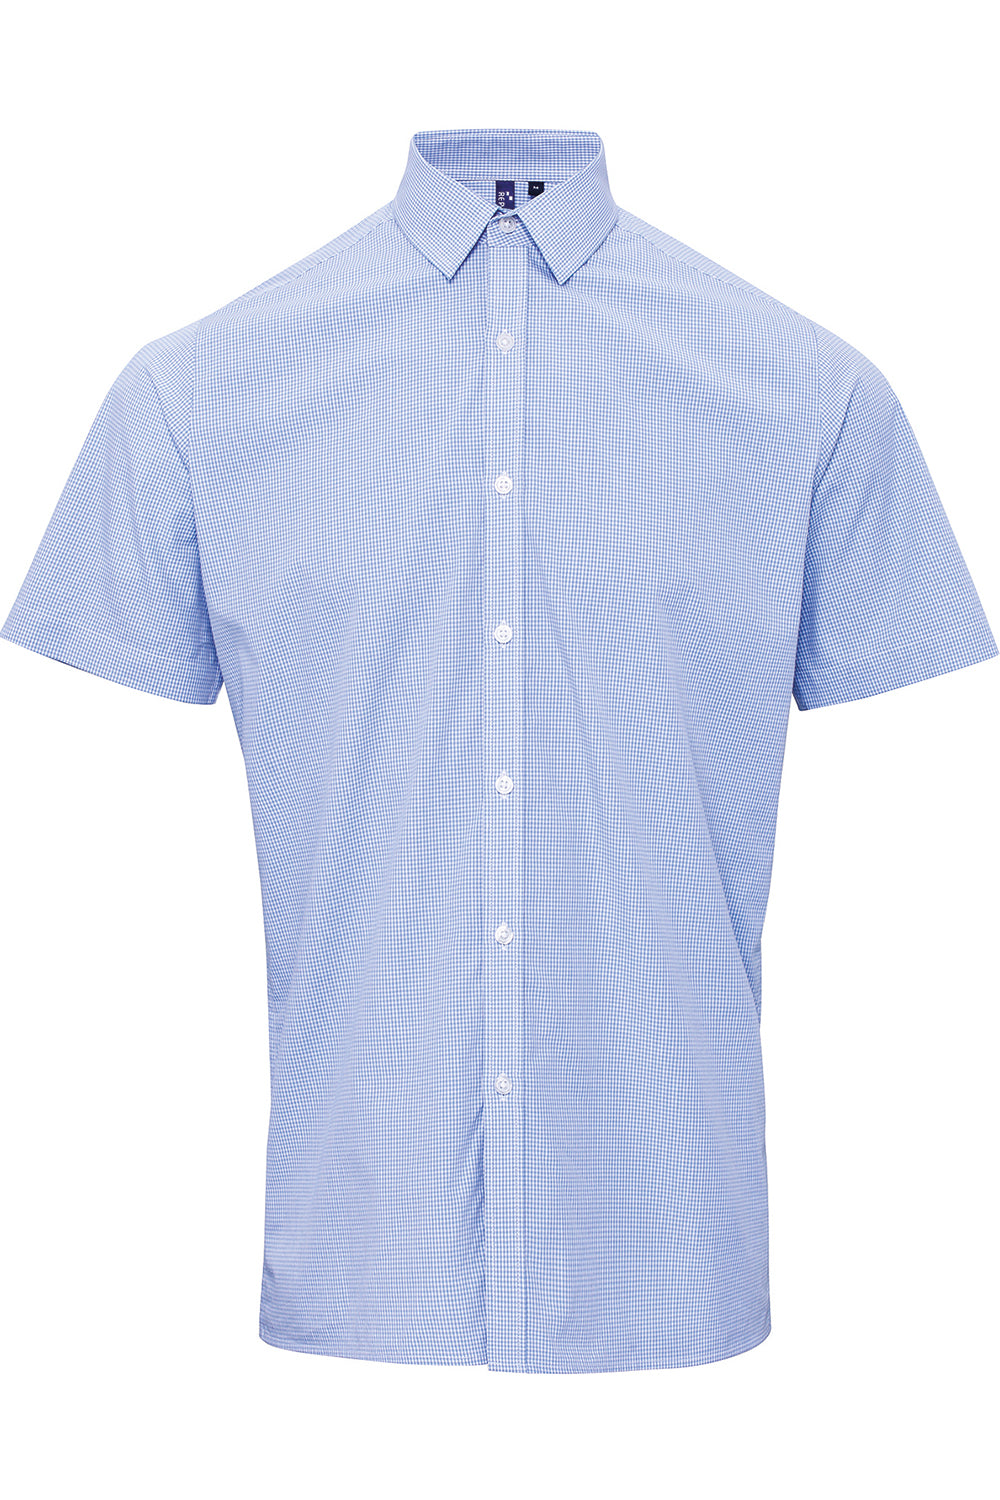 Artisan Collection RP221 Mens Microcheck Gingham Short Sleeve Button Down Shirt Light Blue/White Model Flat Front